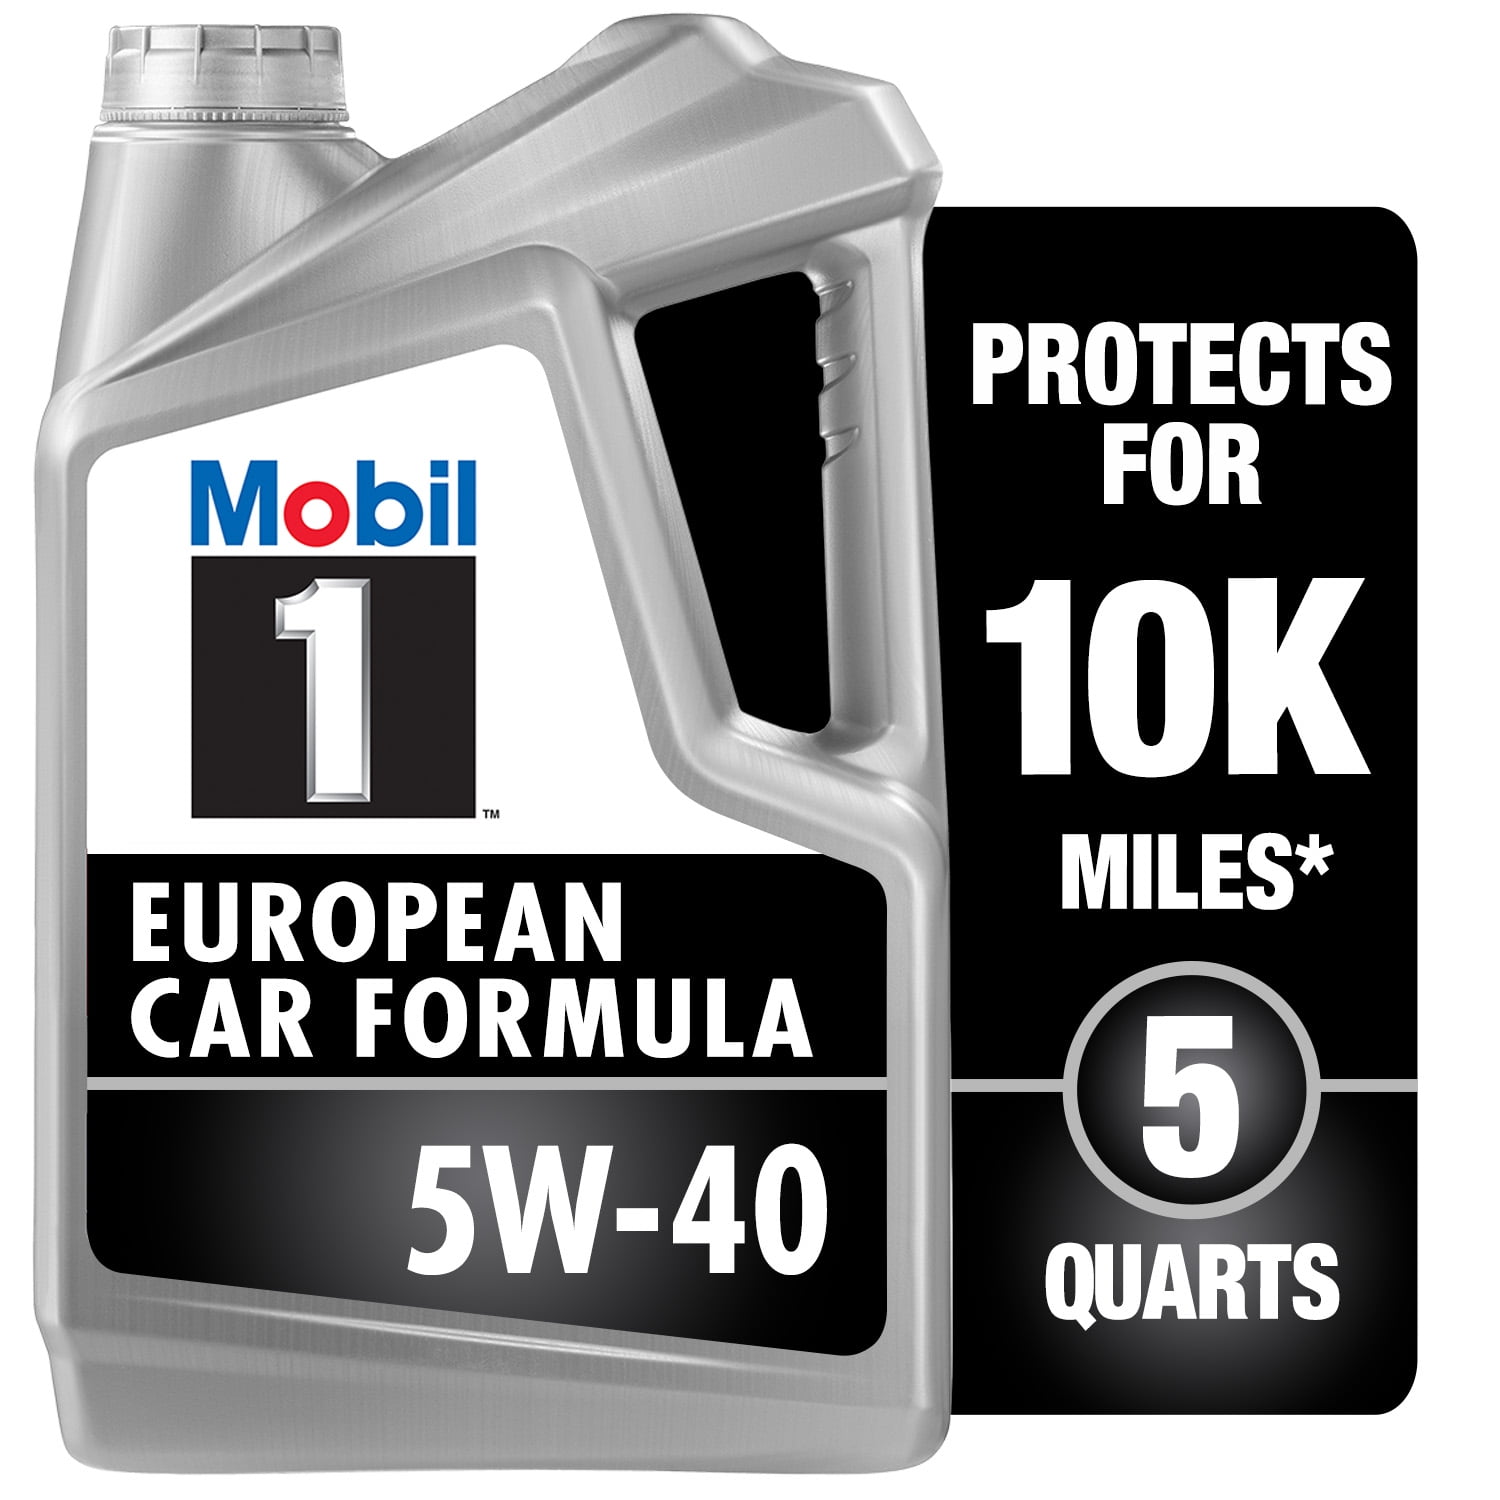 mobil-1-fs-european-car-formula-full-synthetic-motor-oil-5w-40-5-qt